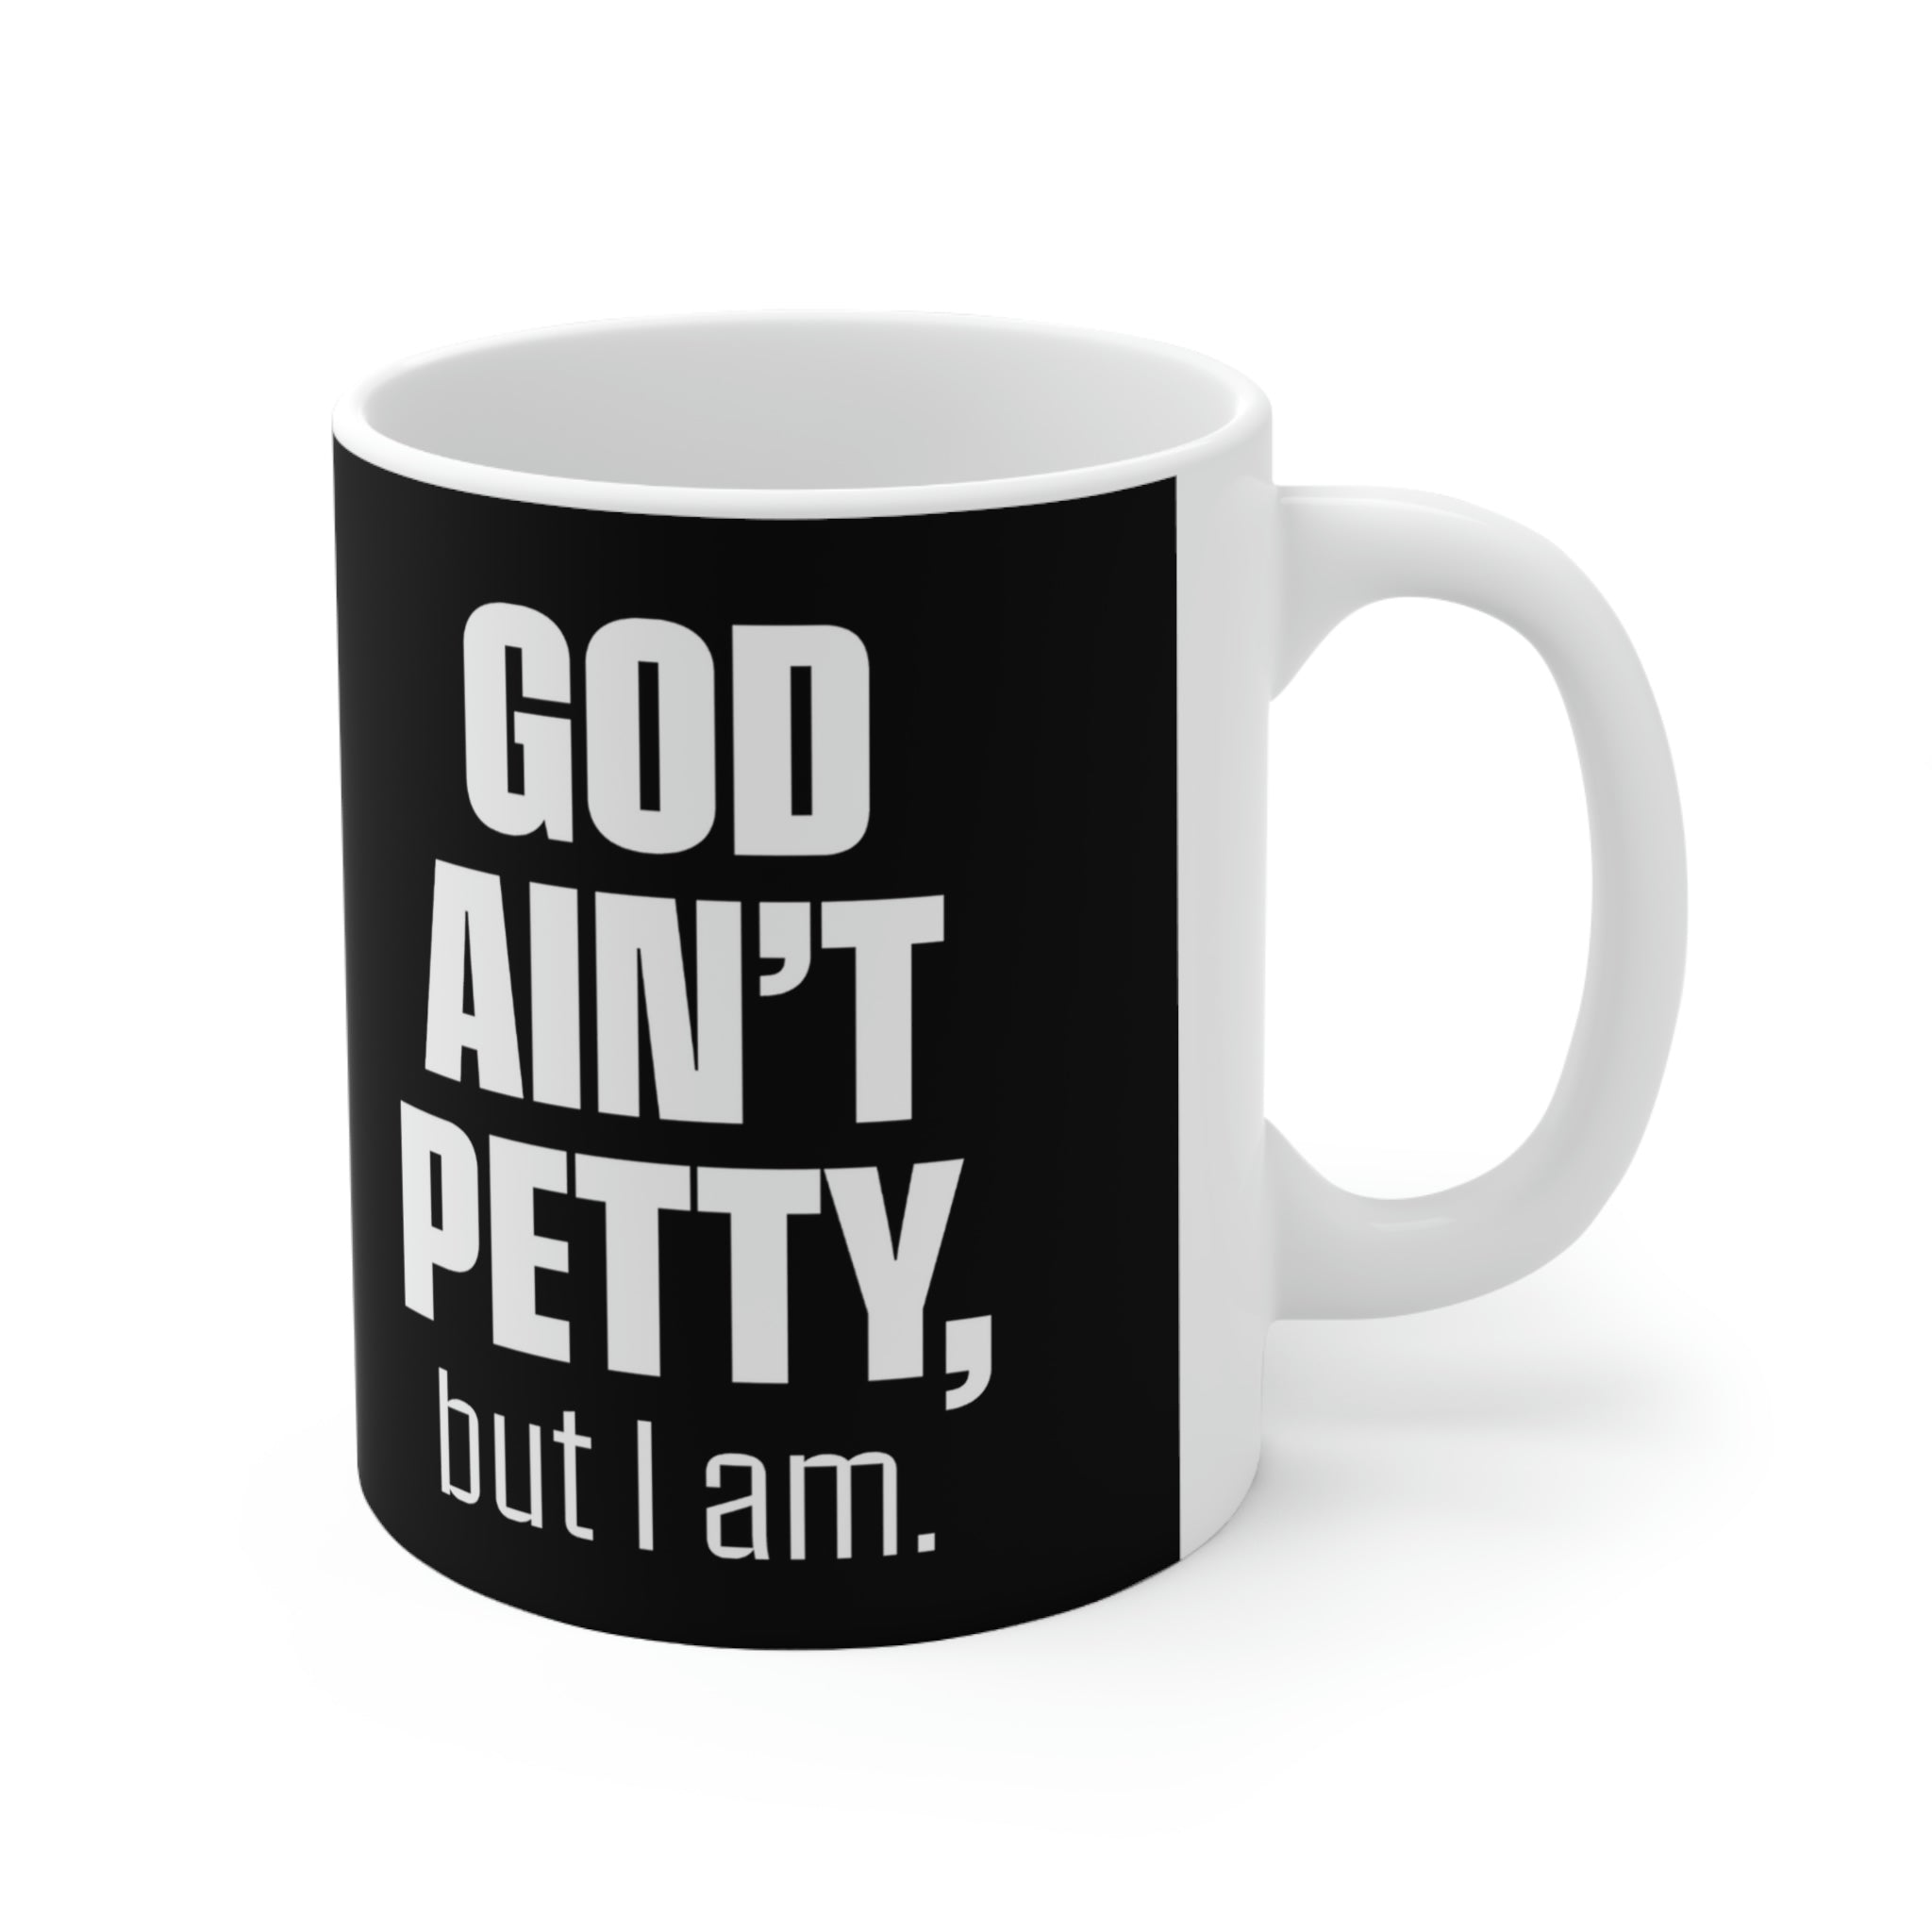 God Ain't Petty Ceramic Mug 11oz (Black/White)-Mug-The Original God Ain't Petty But I Am